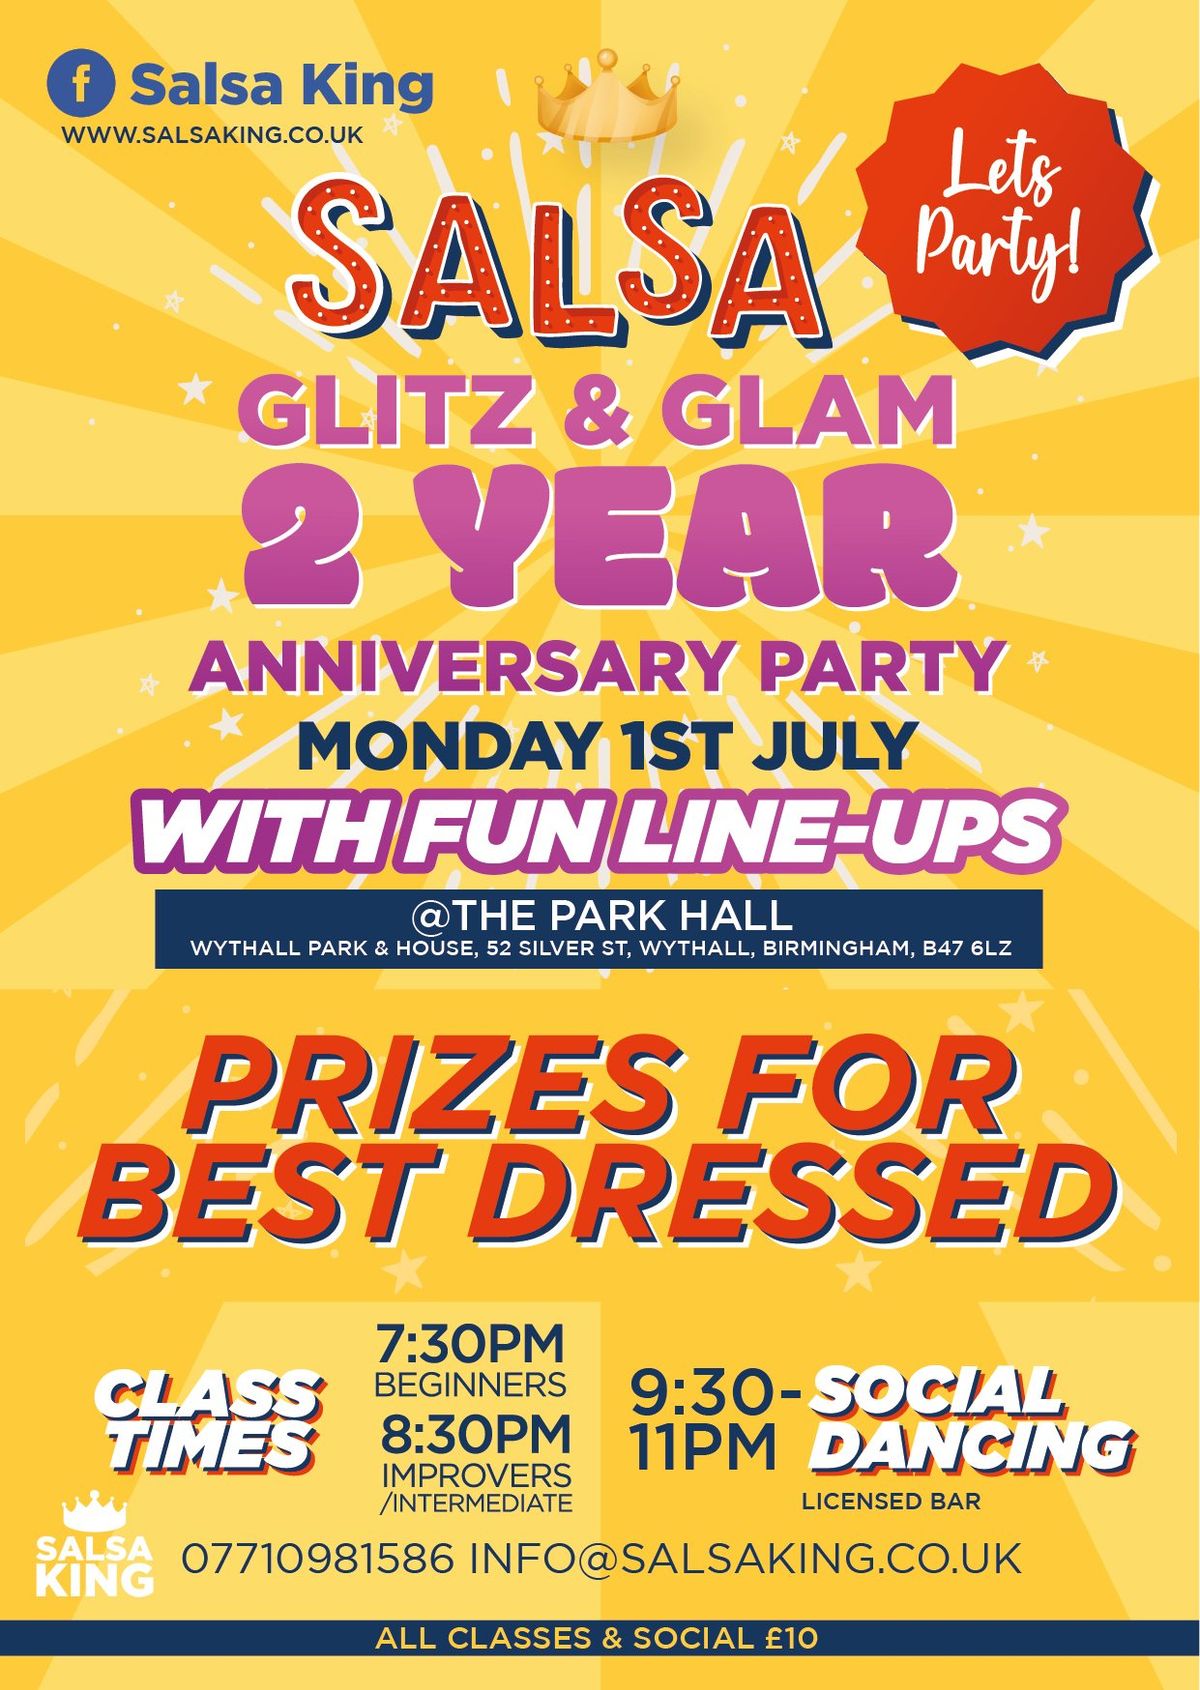 Salsa King 2 Year Anniversary Party - Glitz & Glam - Wythall Birmingham